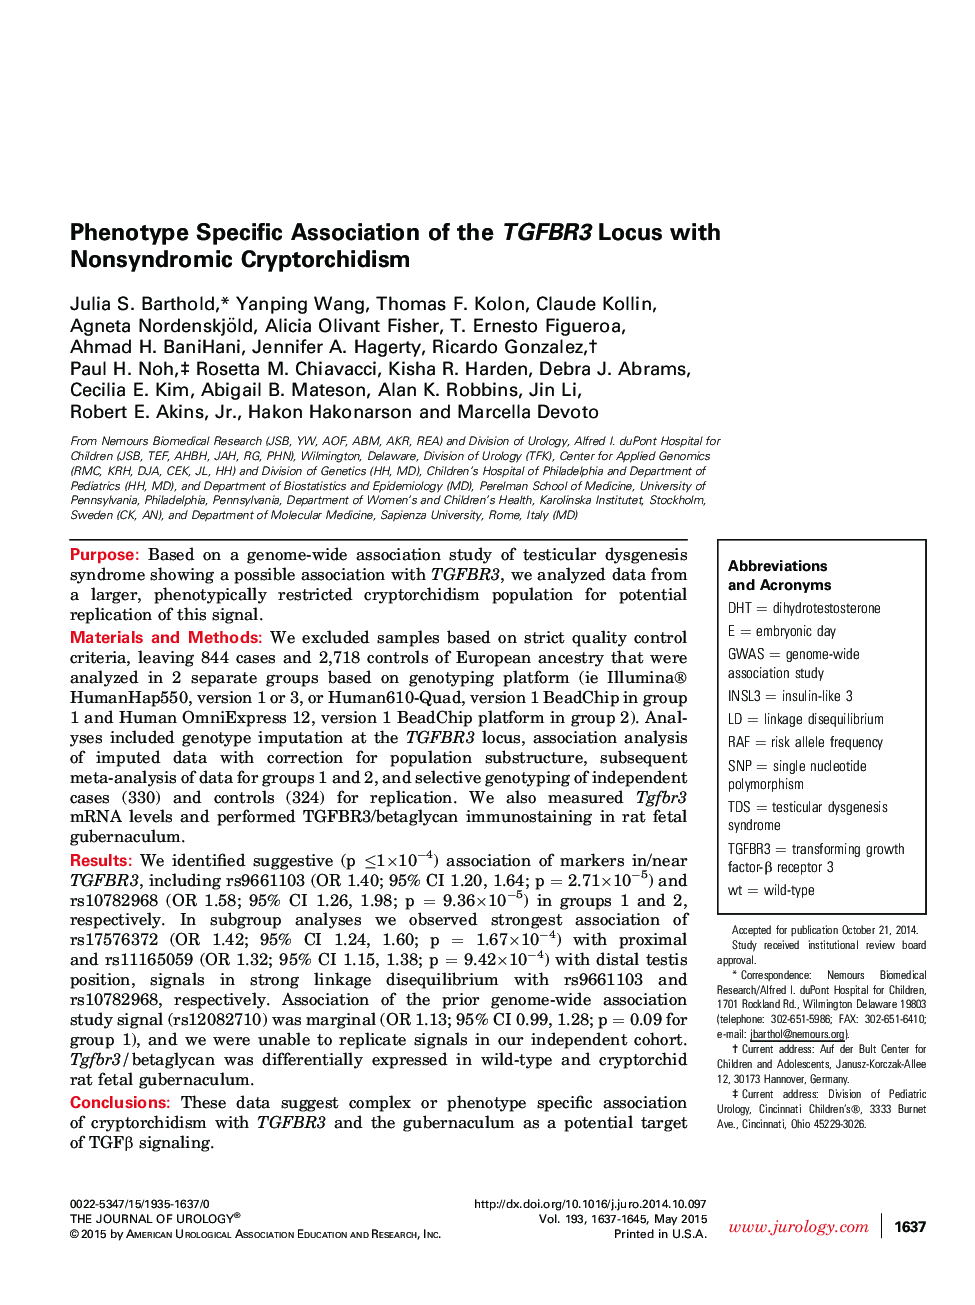 Phenotype Specific Association of the TGFBR3 Locus with Nonsyndromic Cryptorchidism 